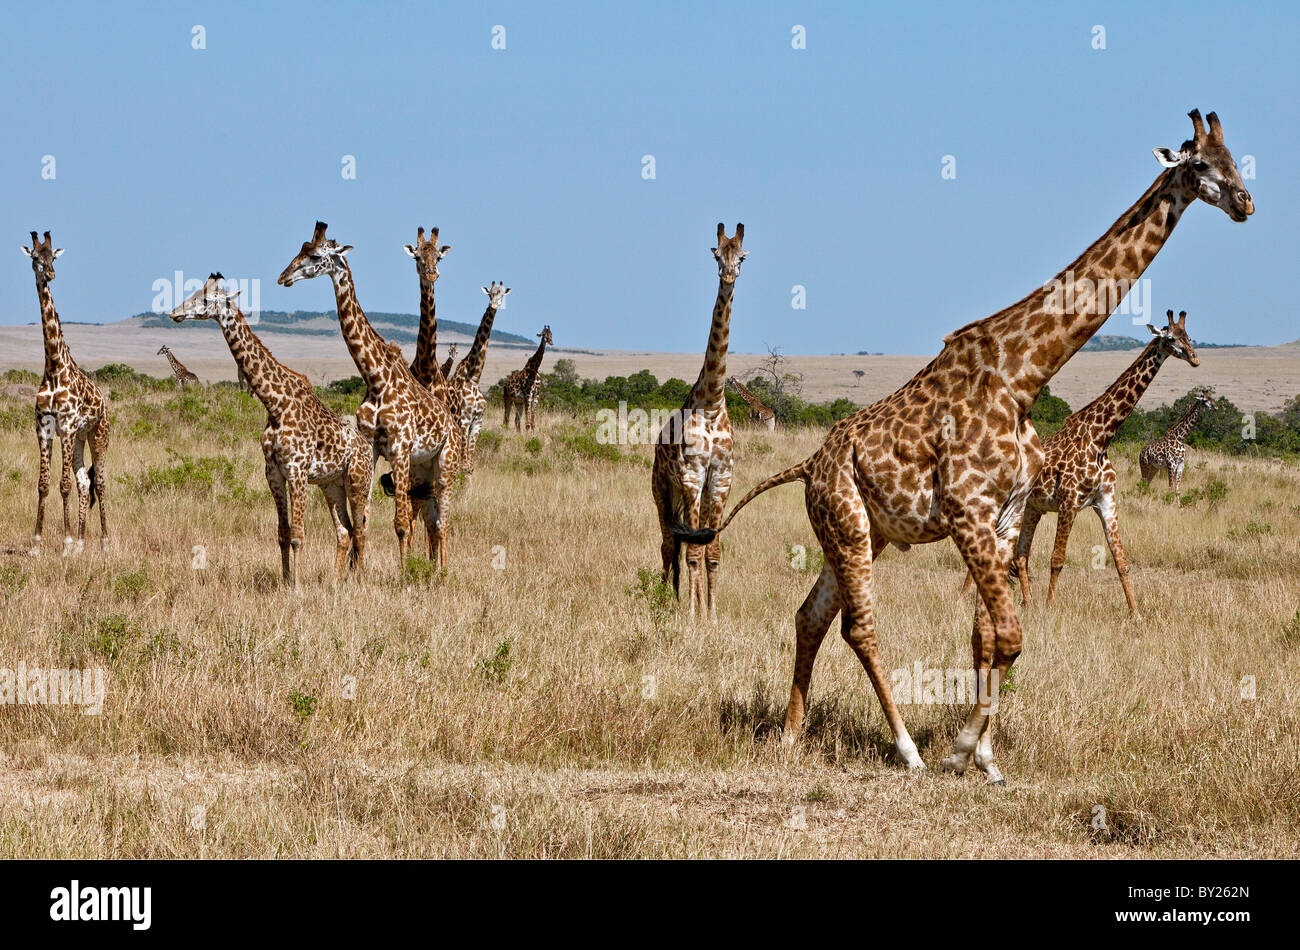 A herd of Maasai giraffes on the plains of the Masai Mara National Reserve. Stock Photo